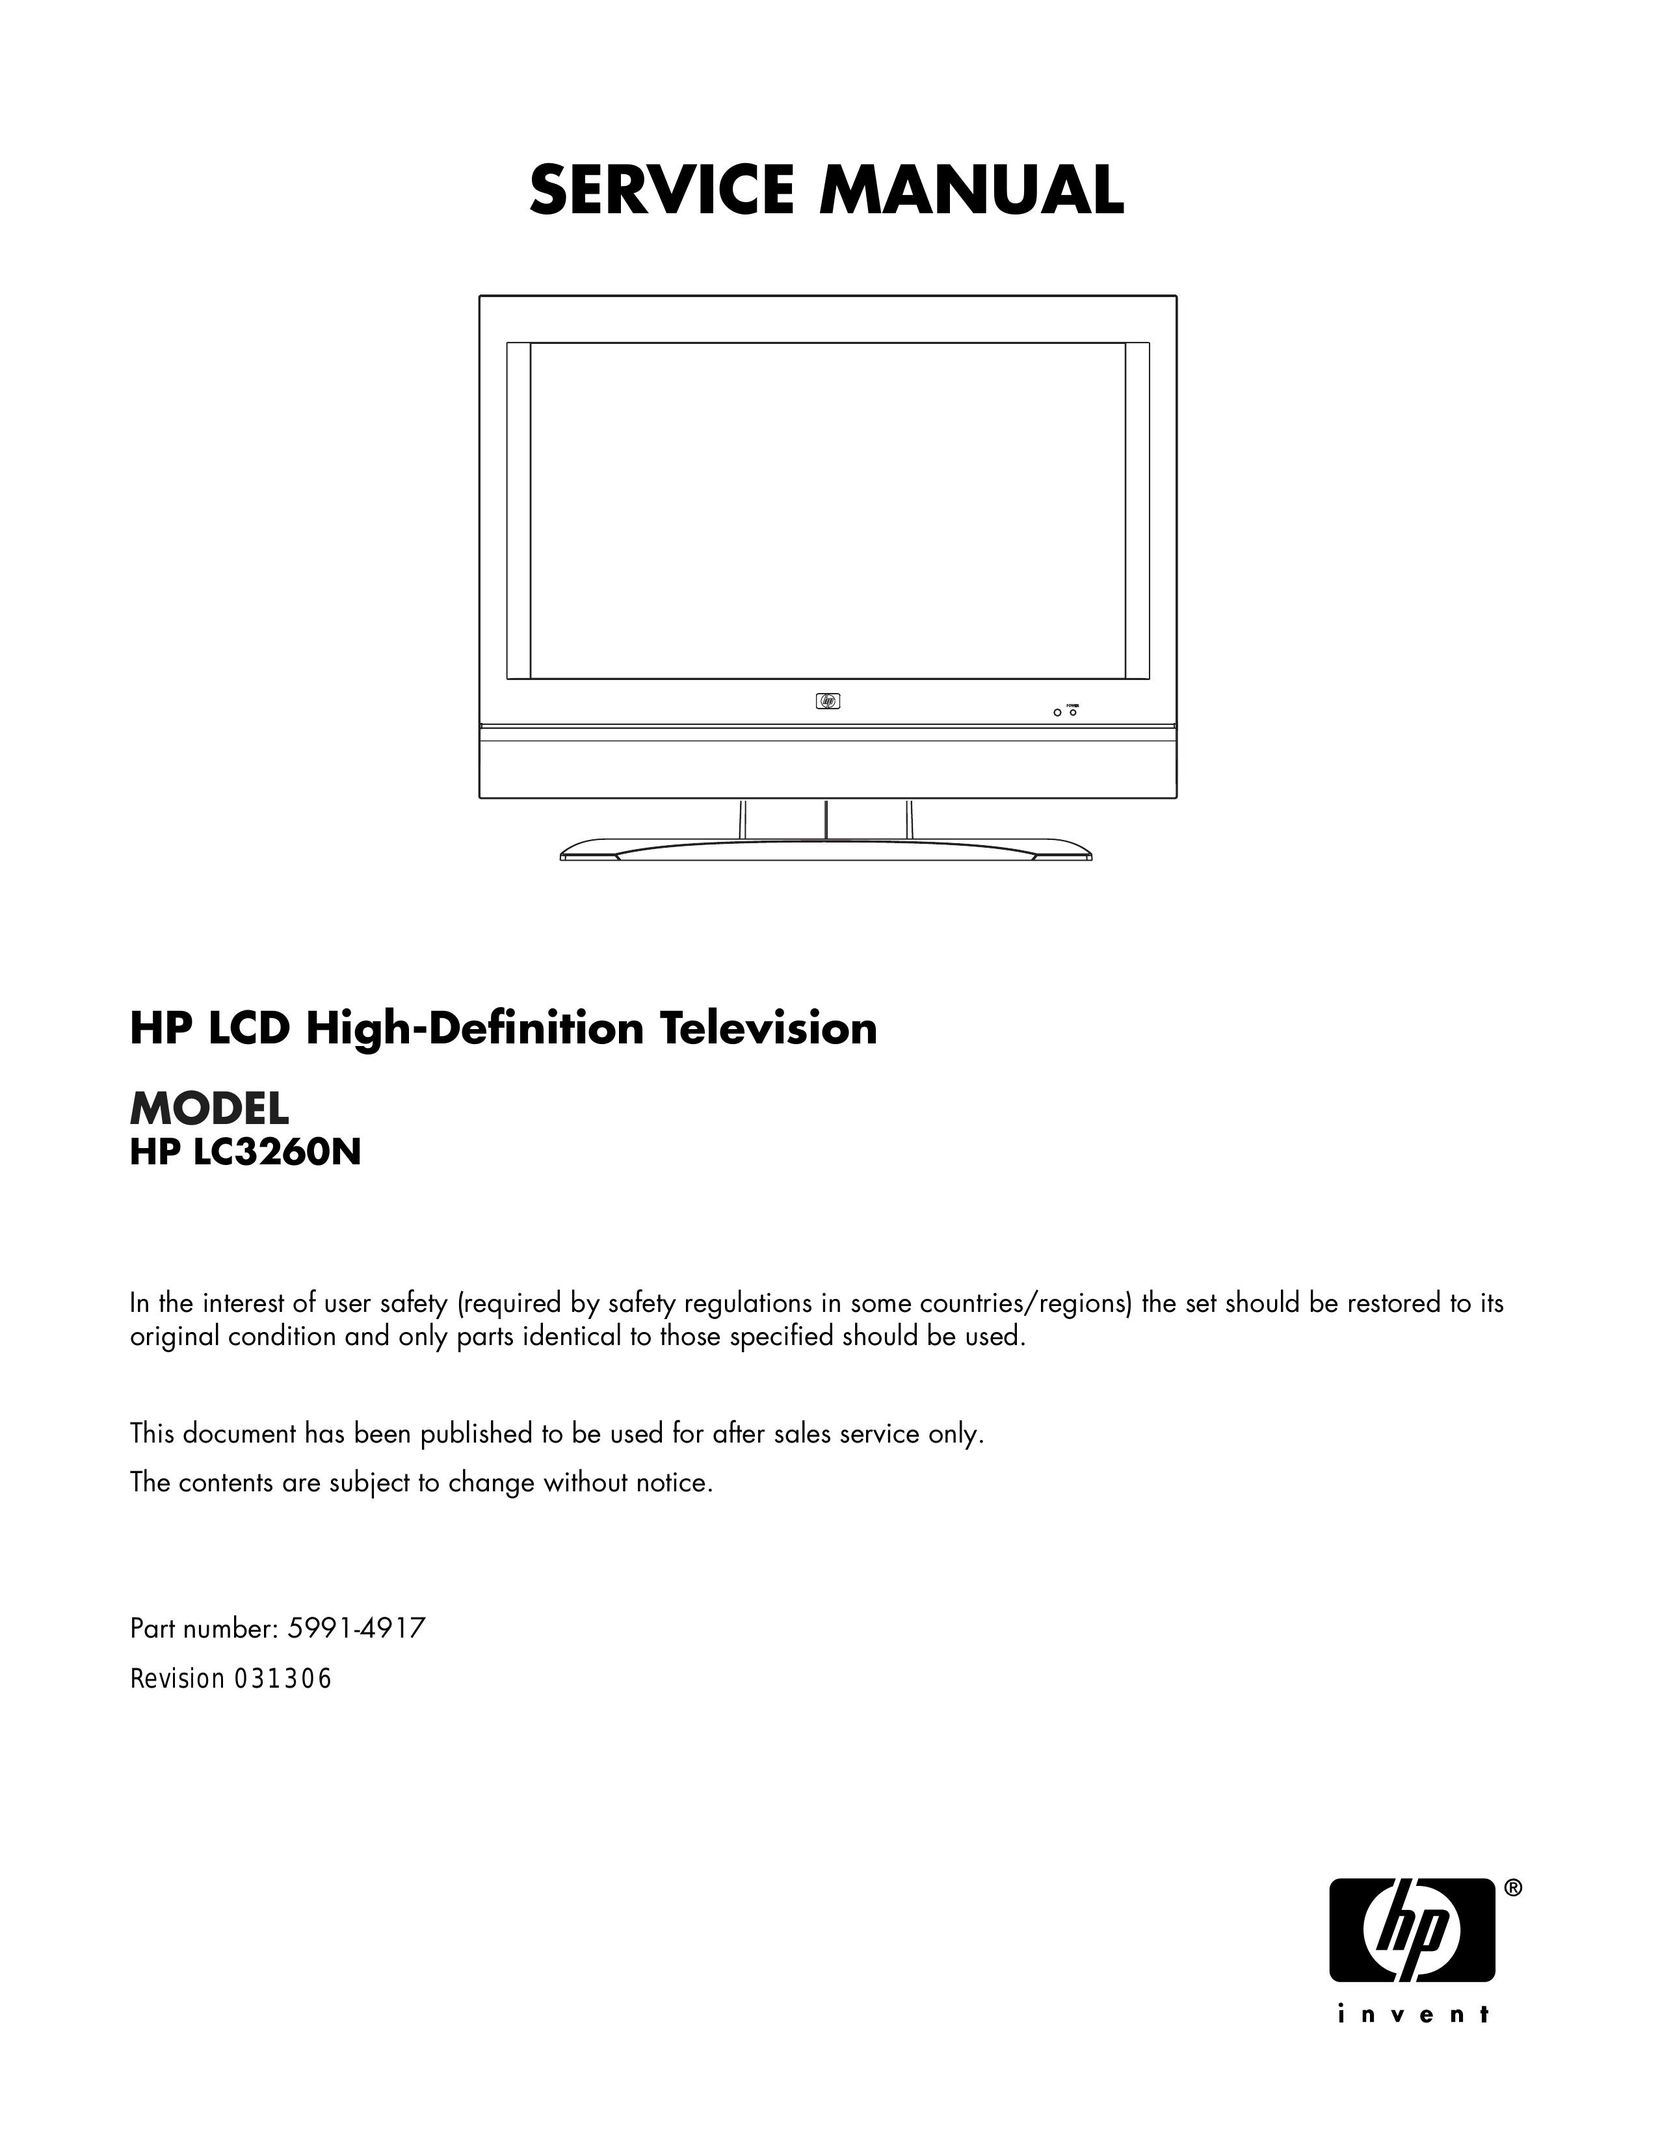 HP (Hewlett-Packard) HP LC3260N Flat Panel Television User Manual